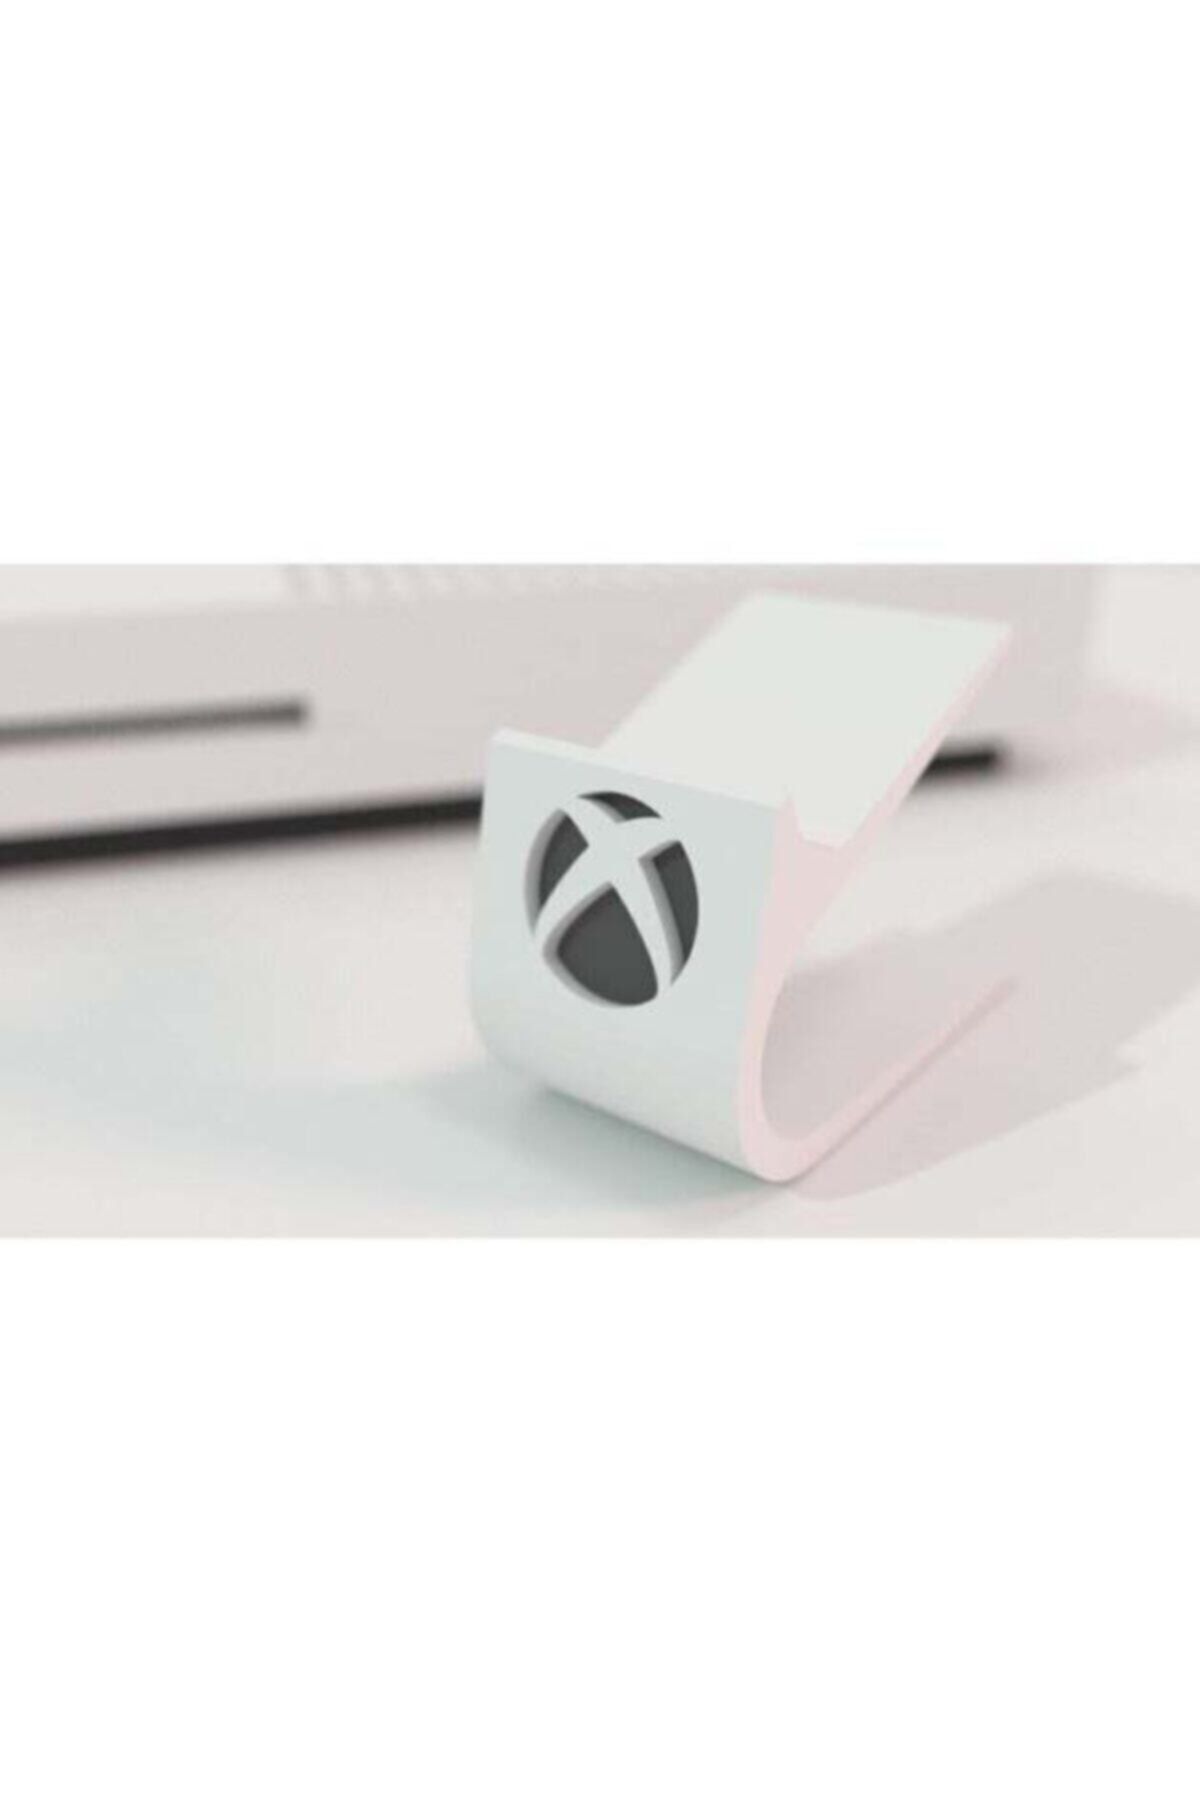 10MİXX Xbox One Stand Kumanda Standı-beyaz Renk